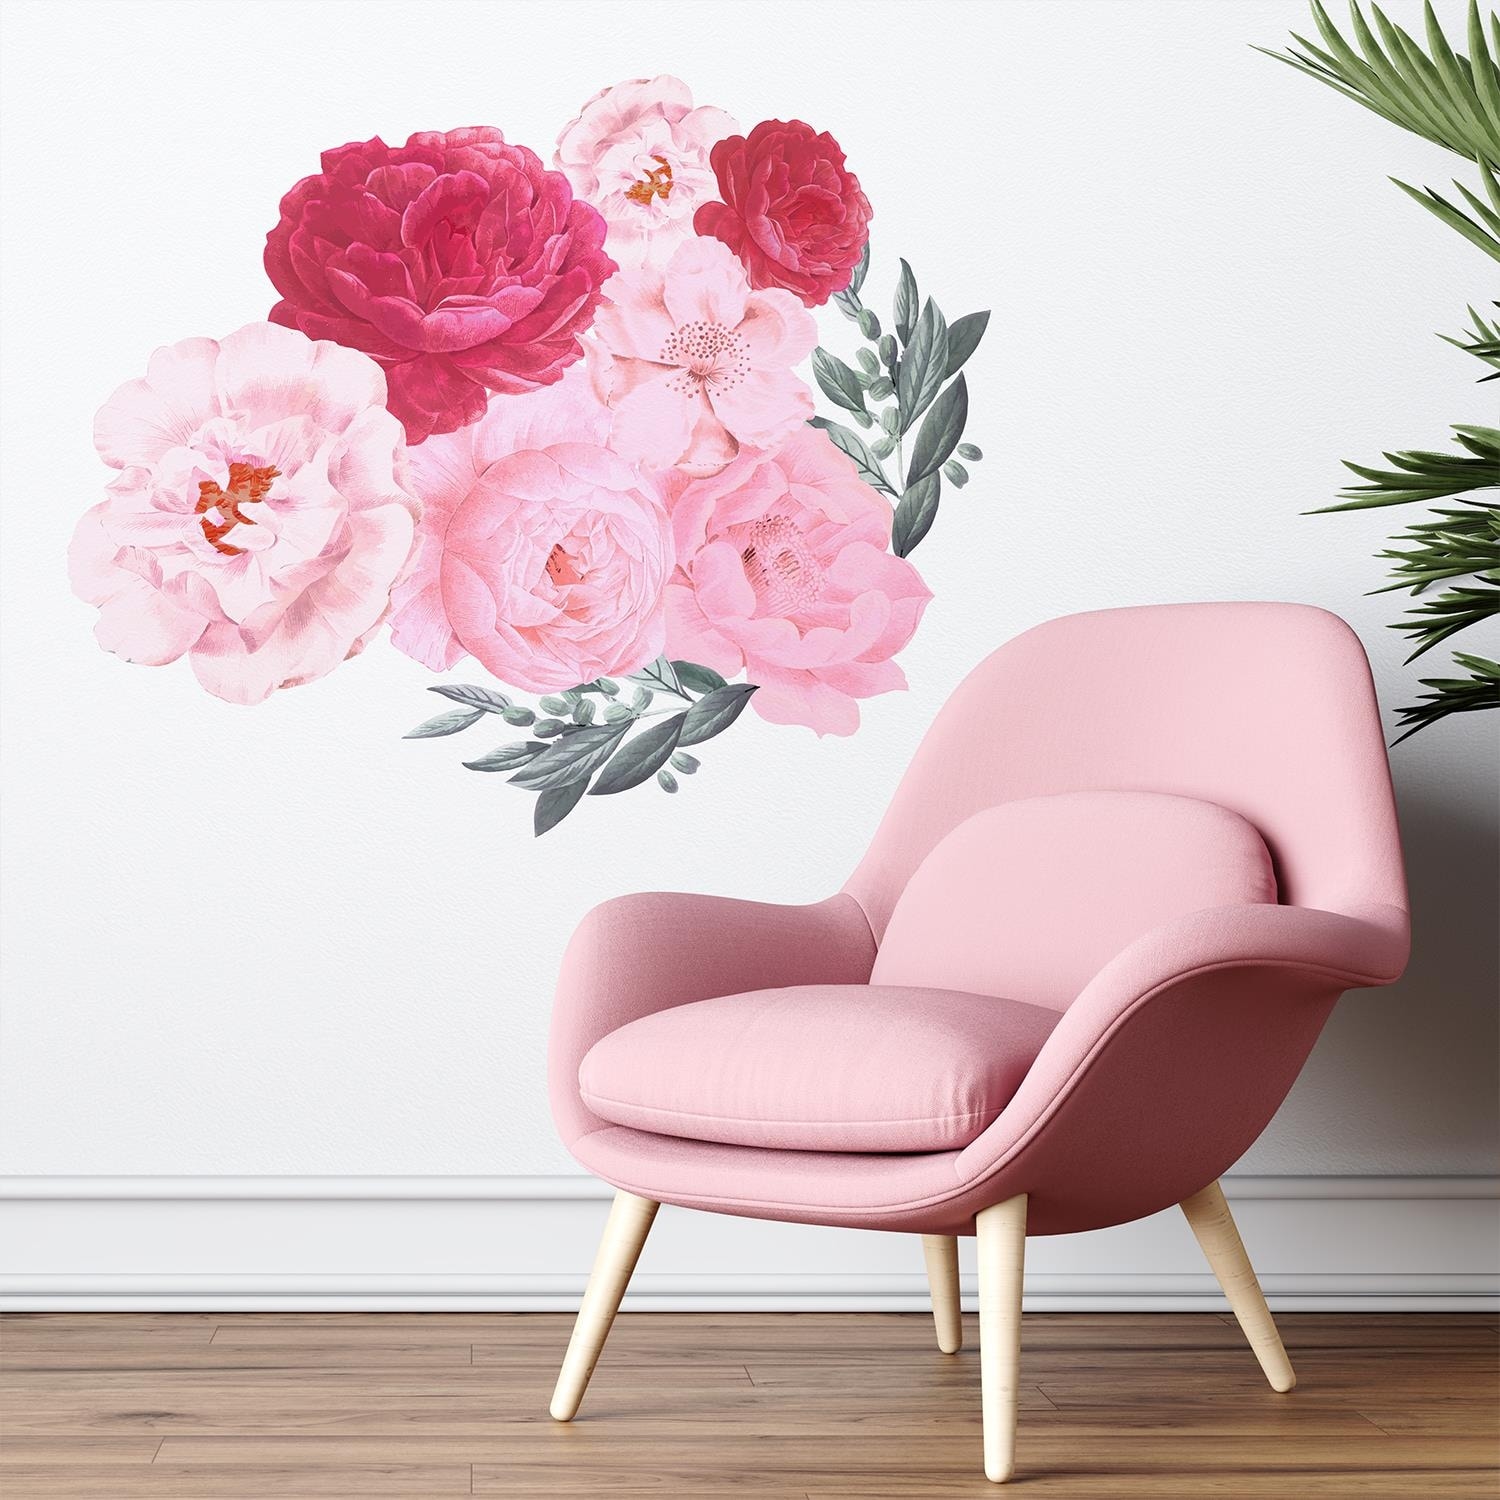 Walplus Elegant Oversized Blush Pink Peonies Wall Stickers Decals